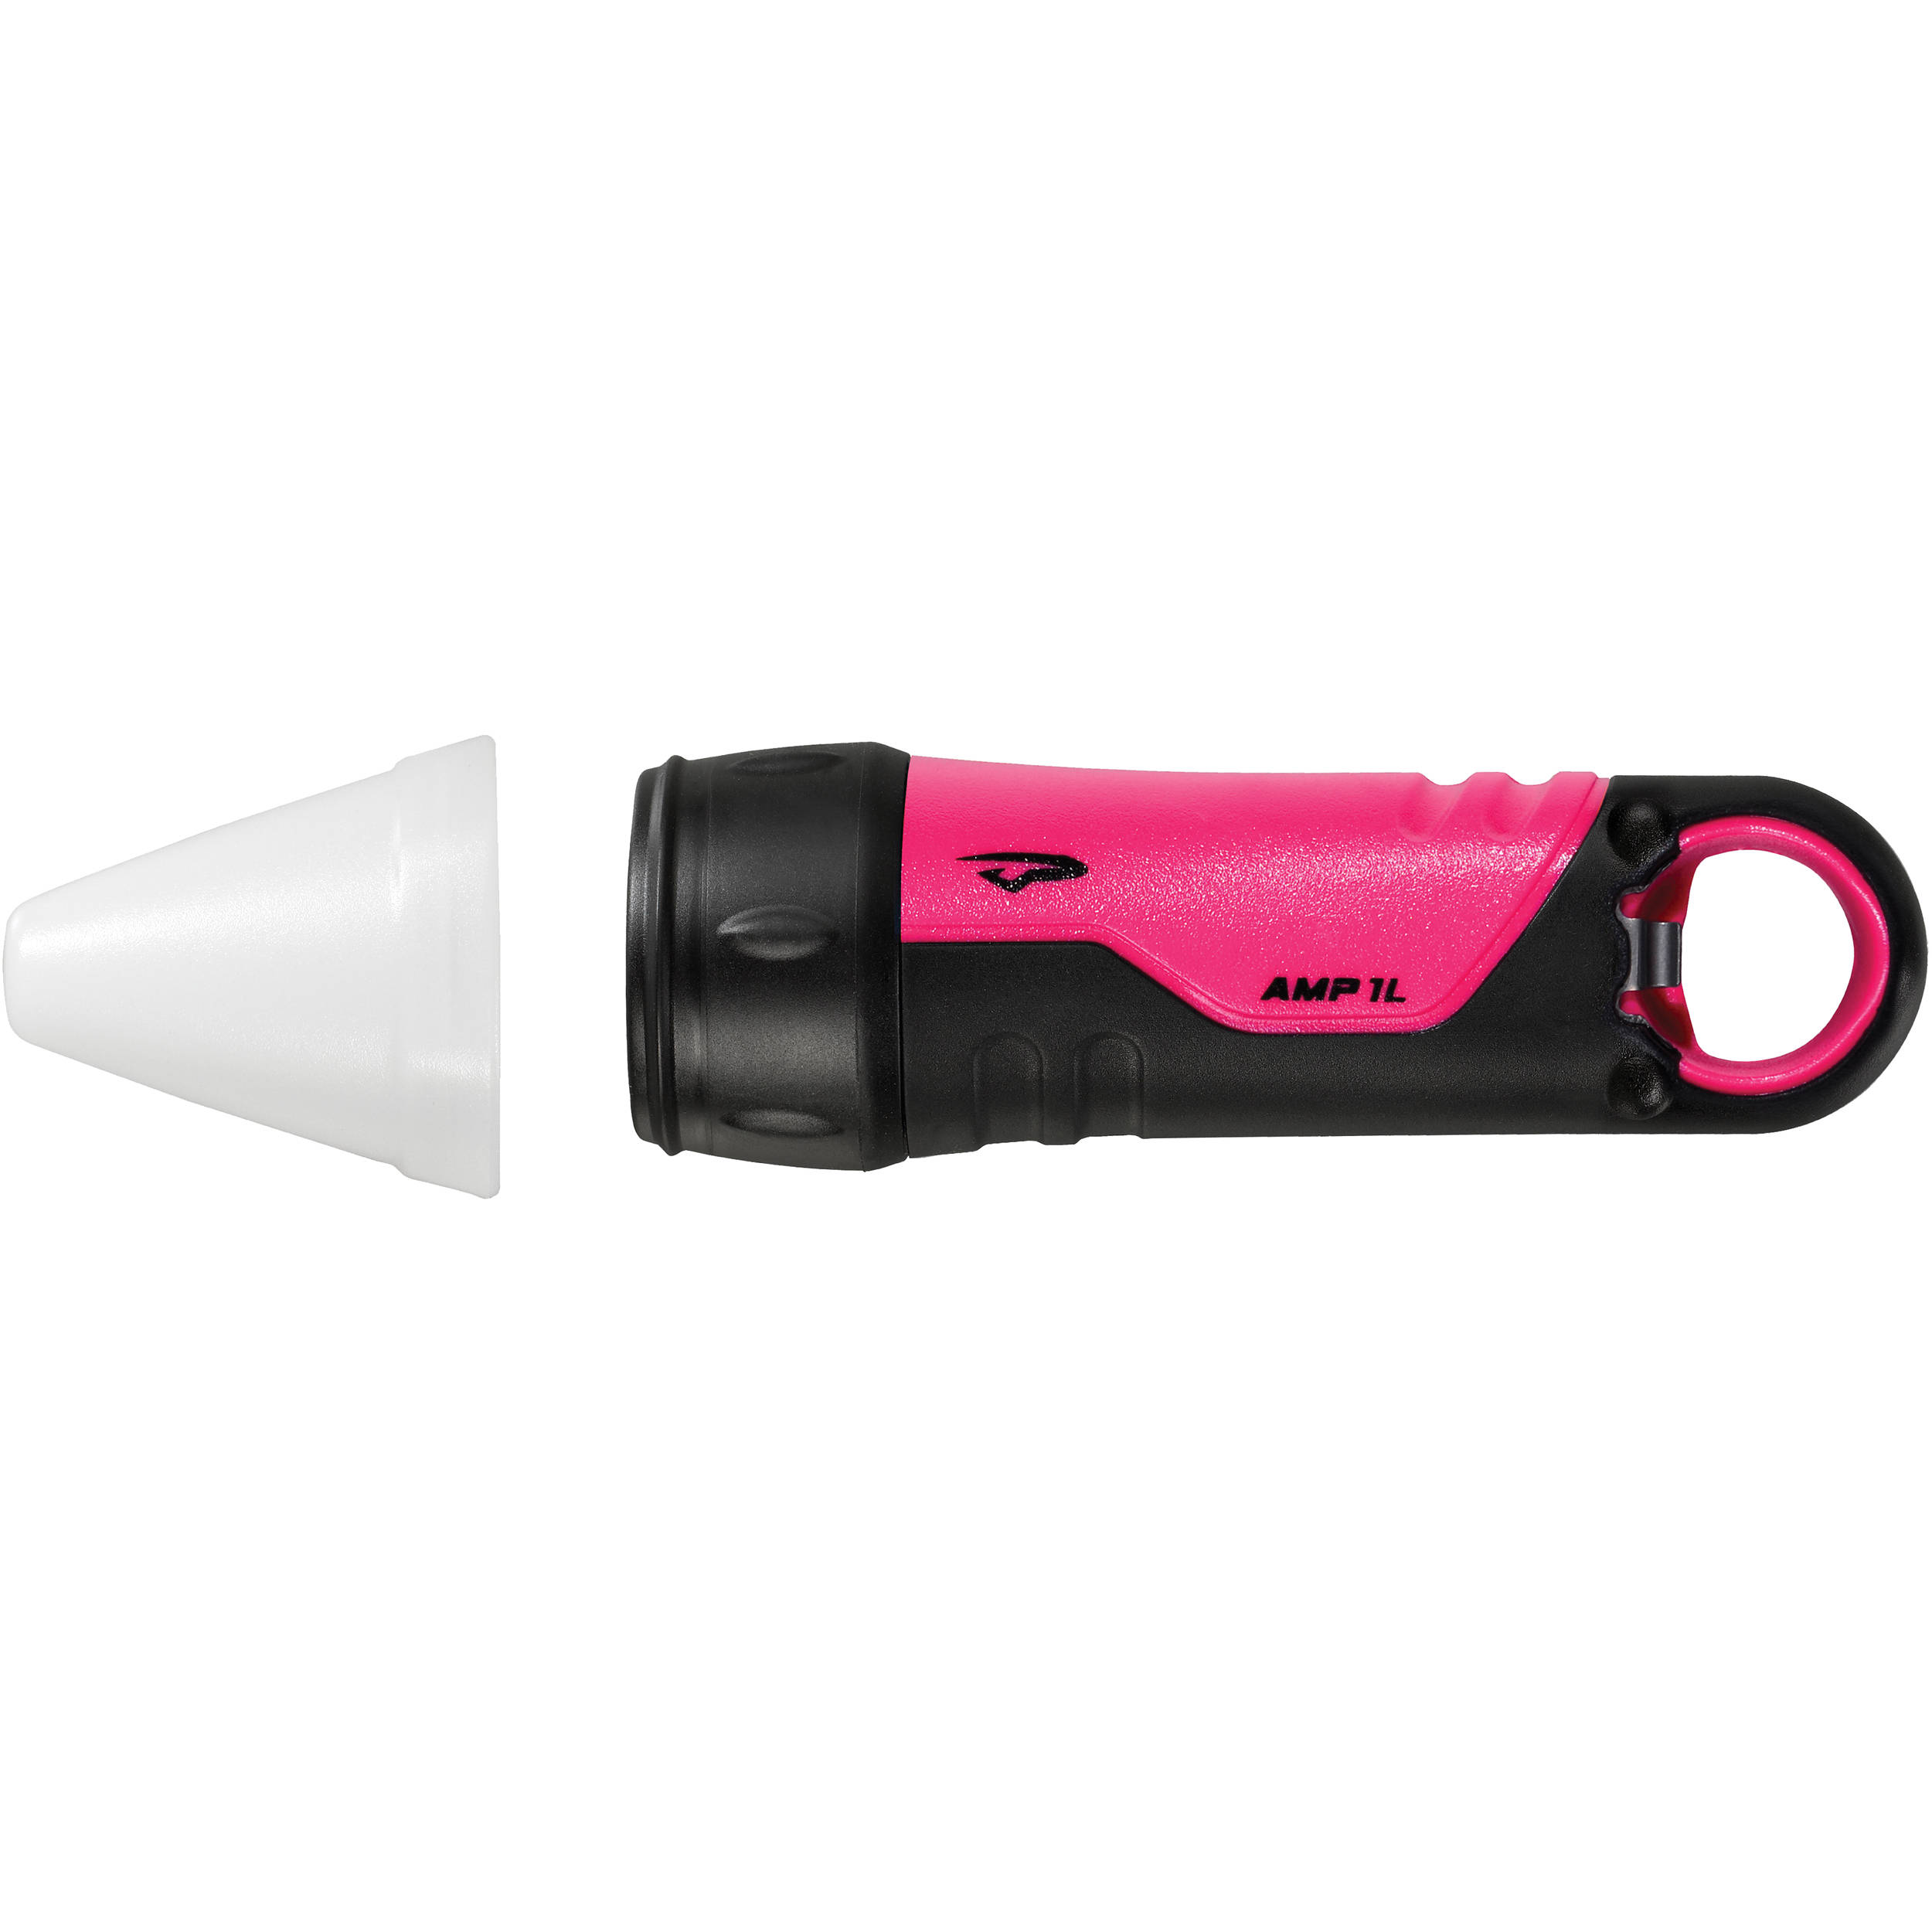 pink flashlight